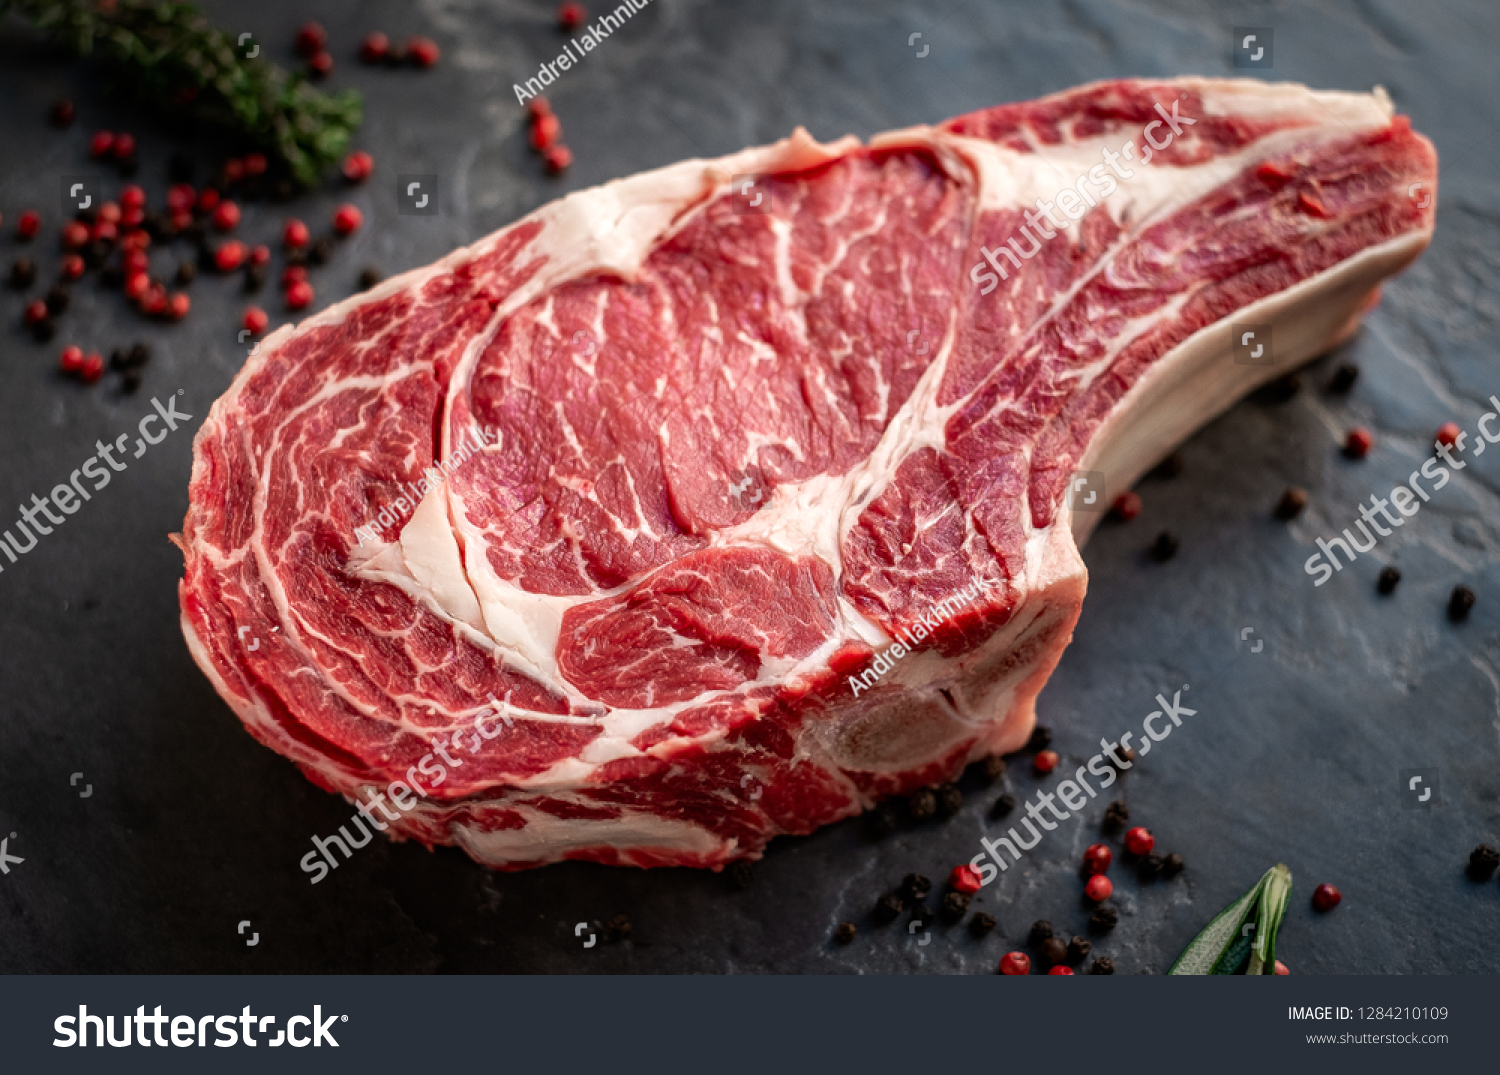 raw cowboy steak with seasonings on stone background, prime rib eye on bone #1284210109